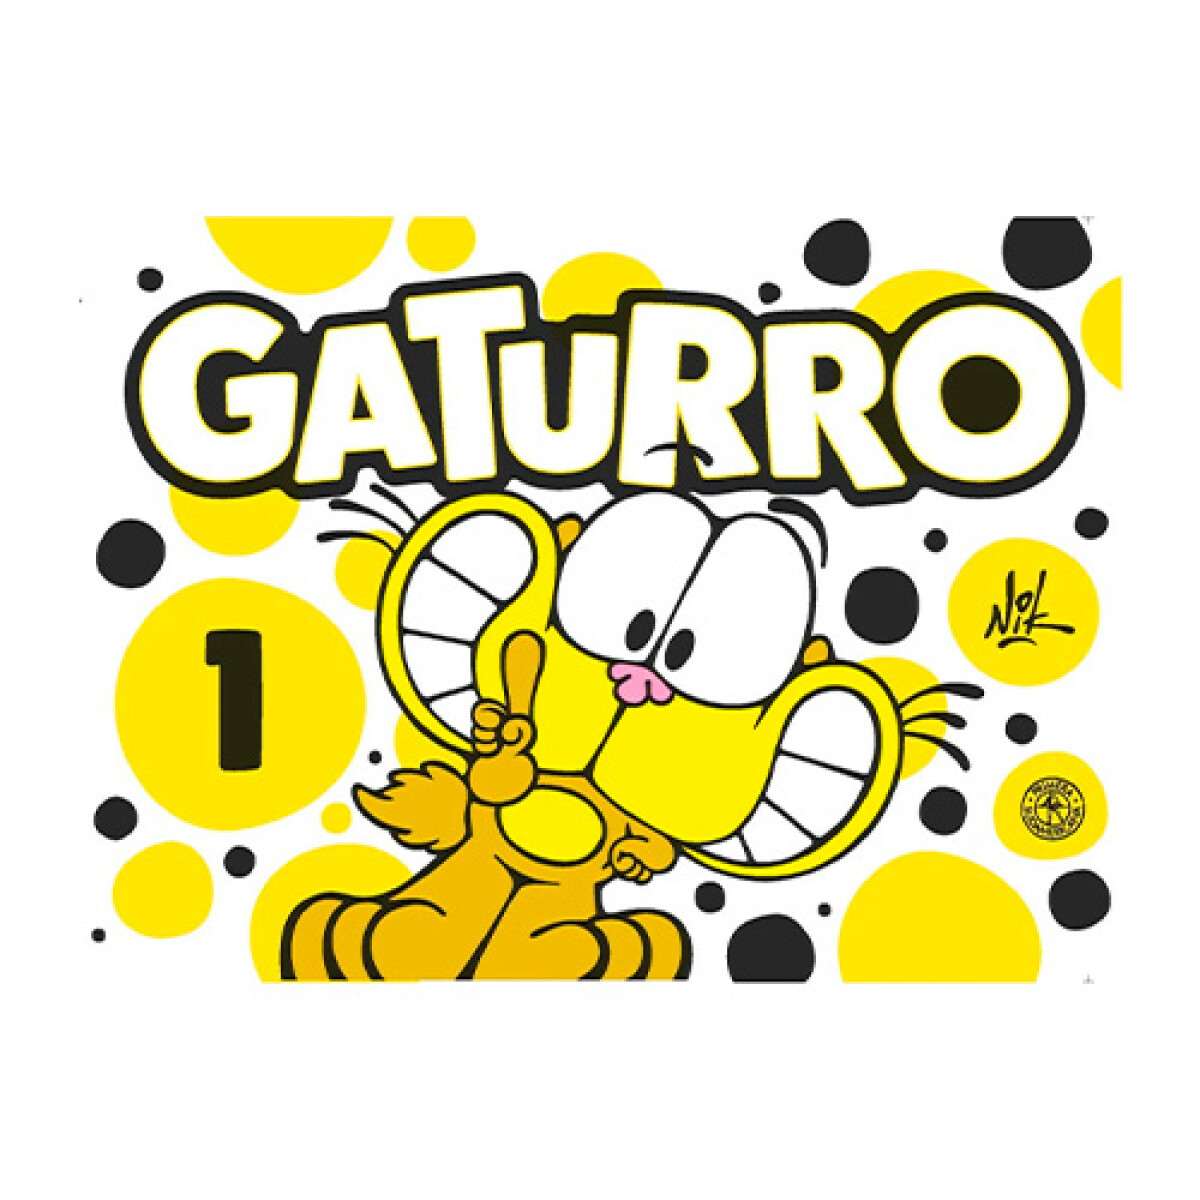 Comics Gaturro 1 - Nik - 001 